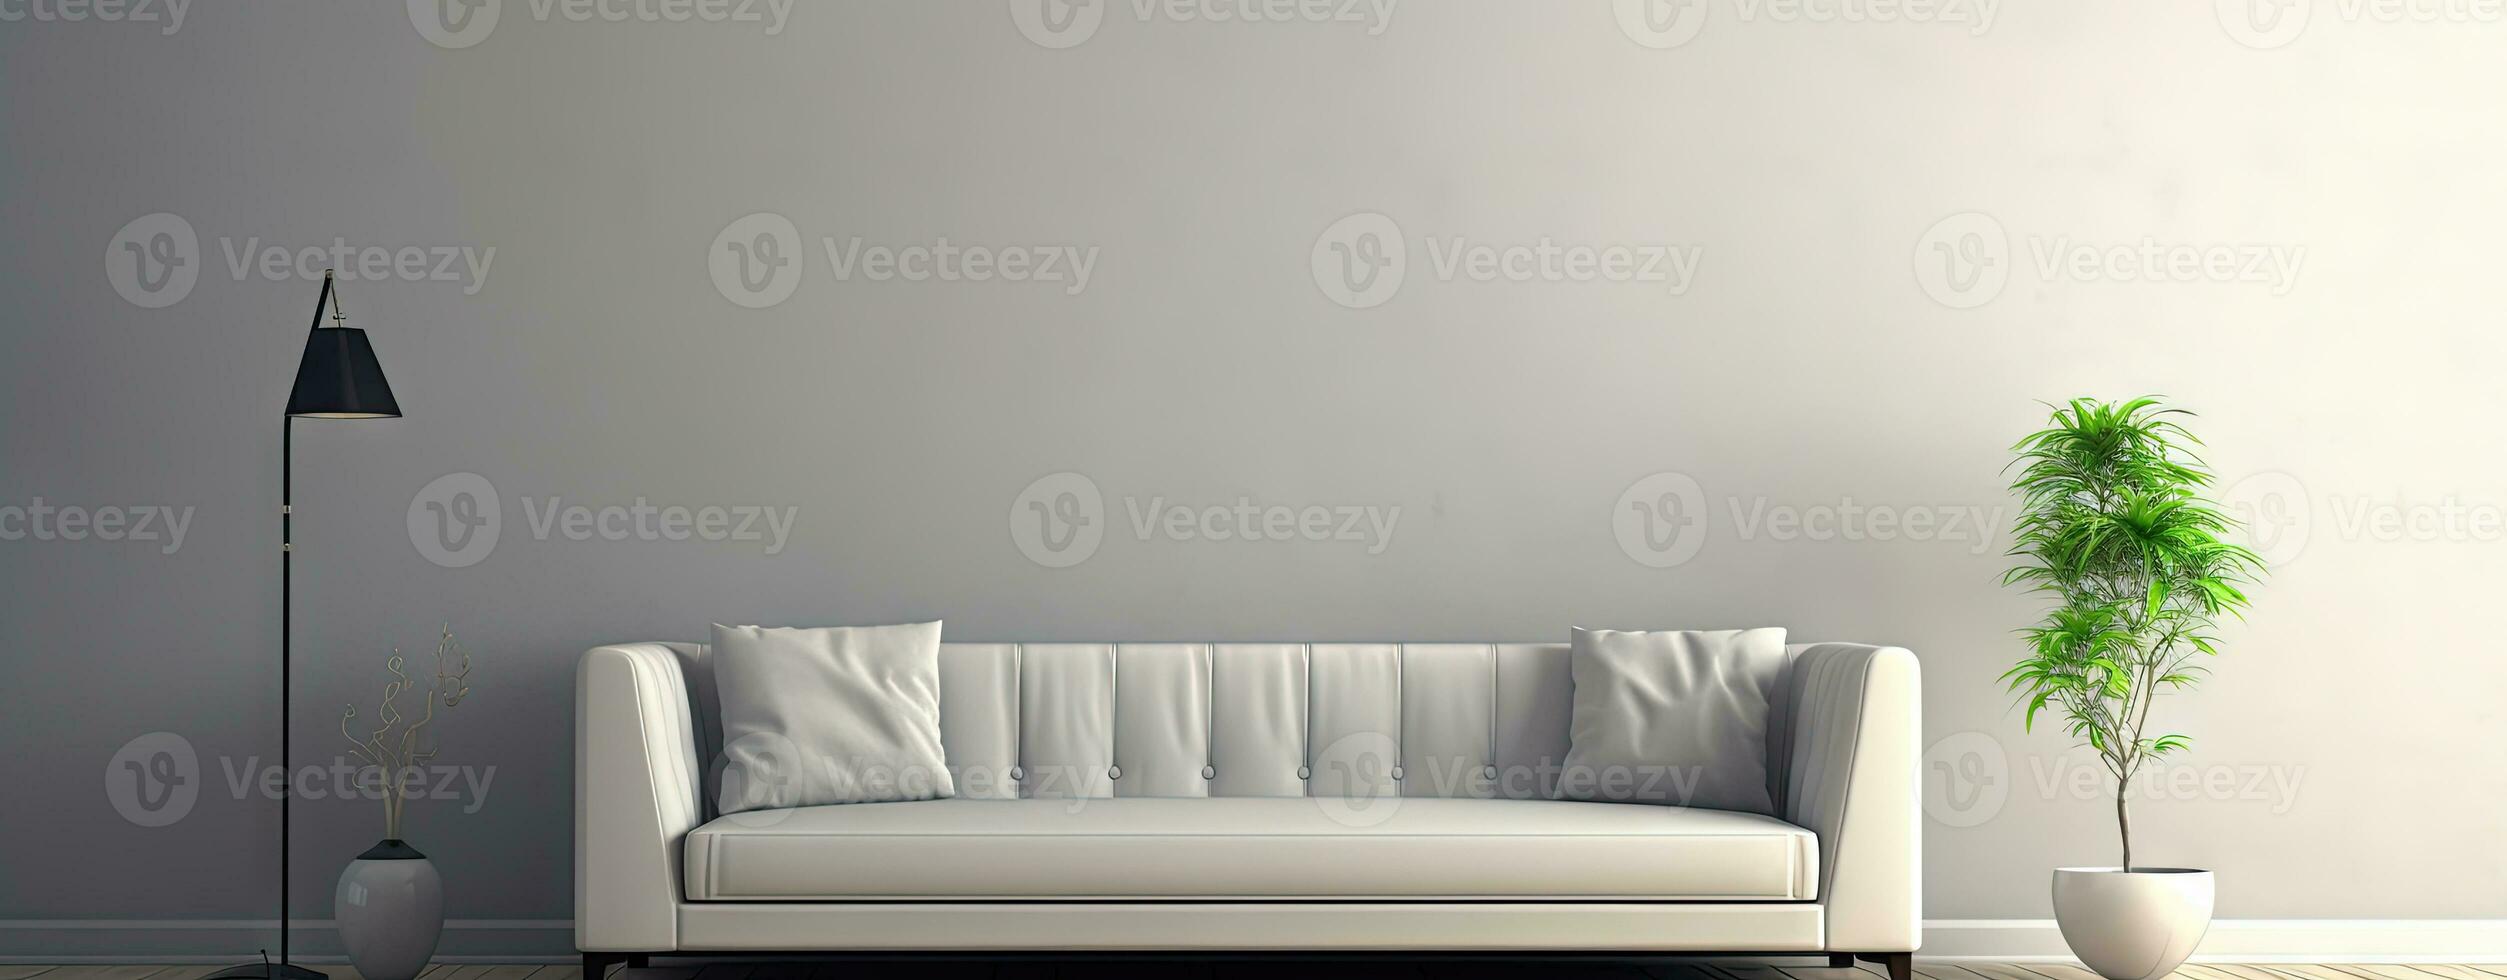 interieur met sofa in modern ontwerp. breed bankstel in de hedendaags kamer. gegenereerd ai. foto